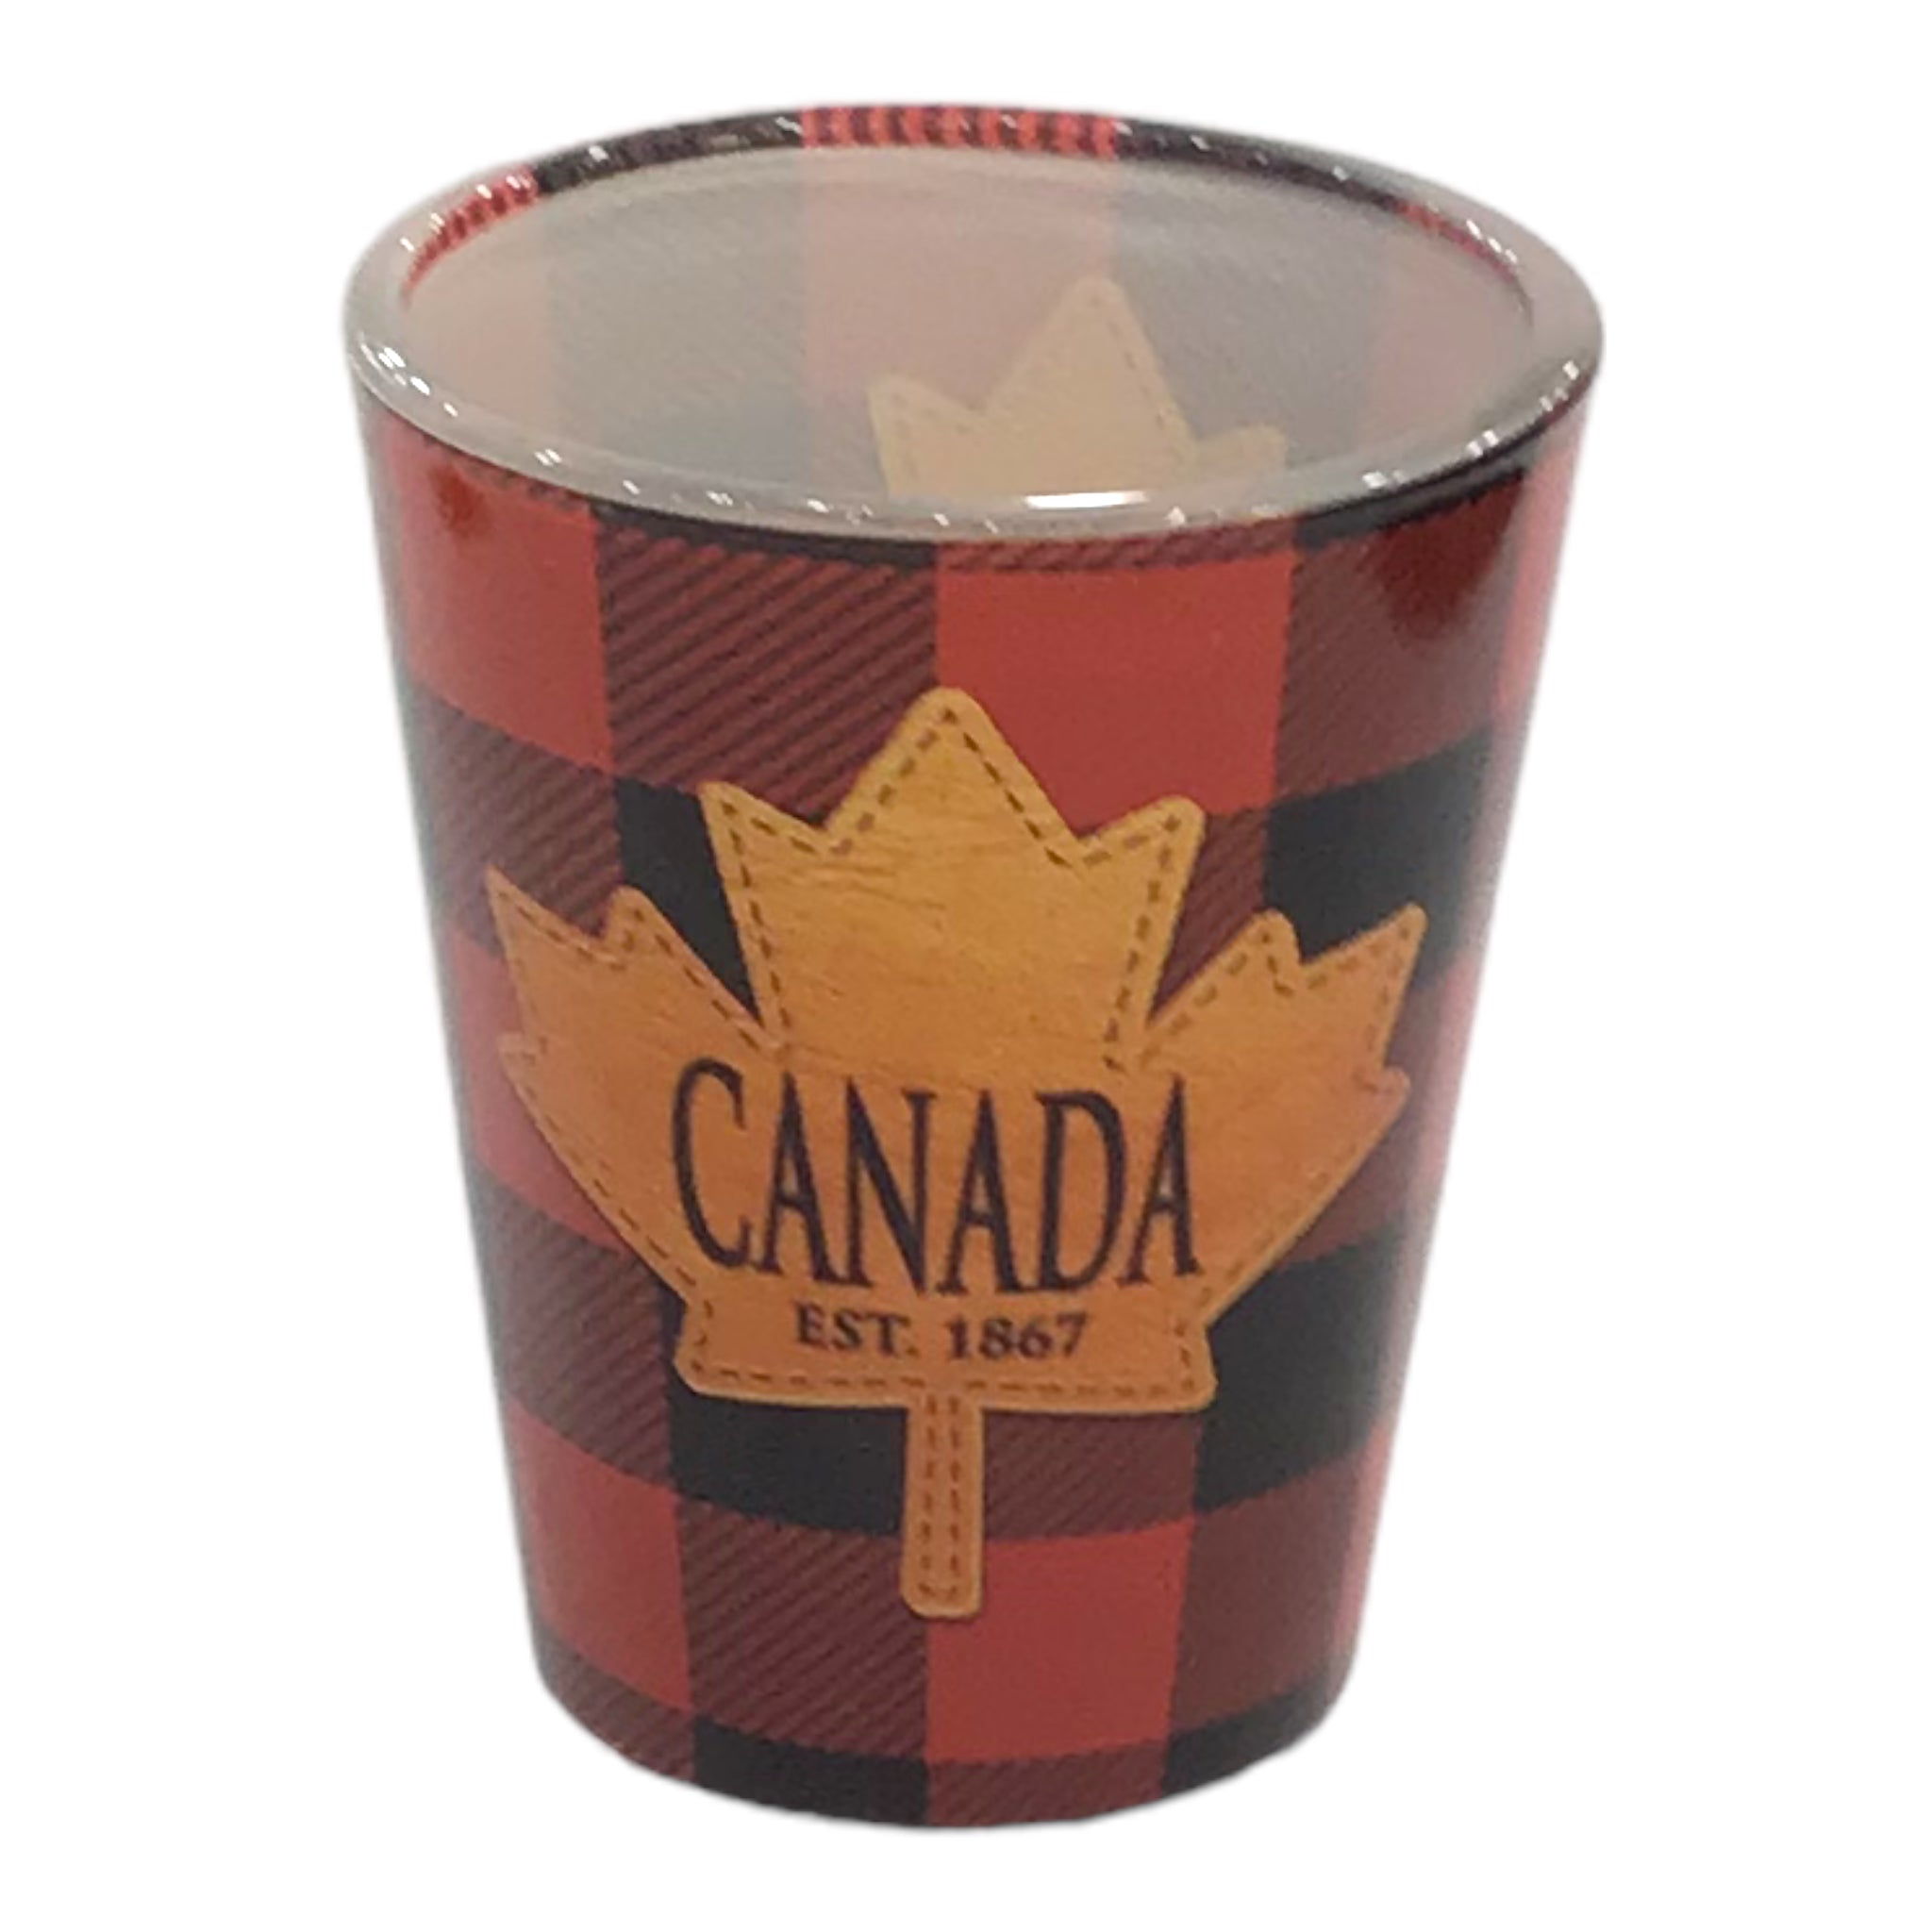 SHOT GLASS CANADA RED BLACK PLAID W/ VINTAGE MAPLE LEAF